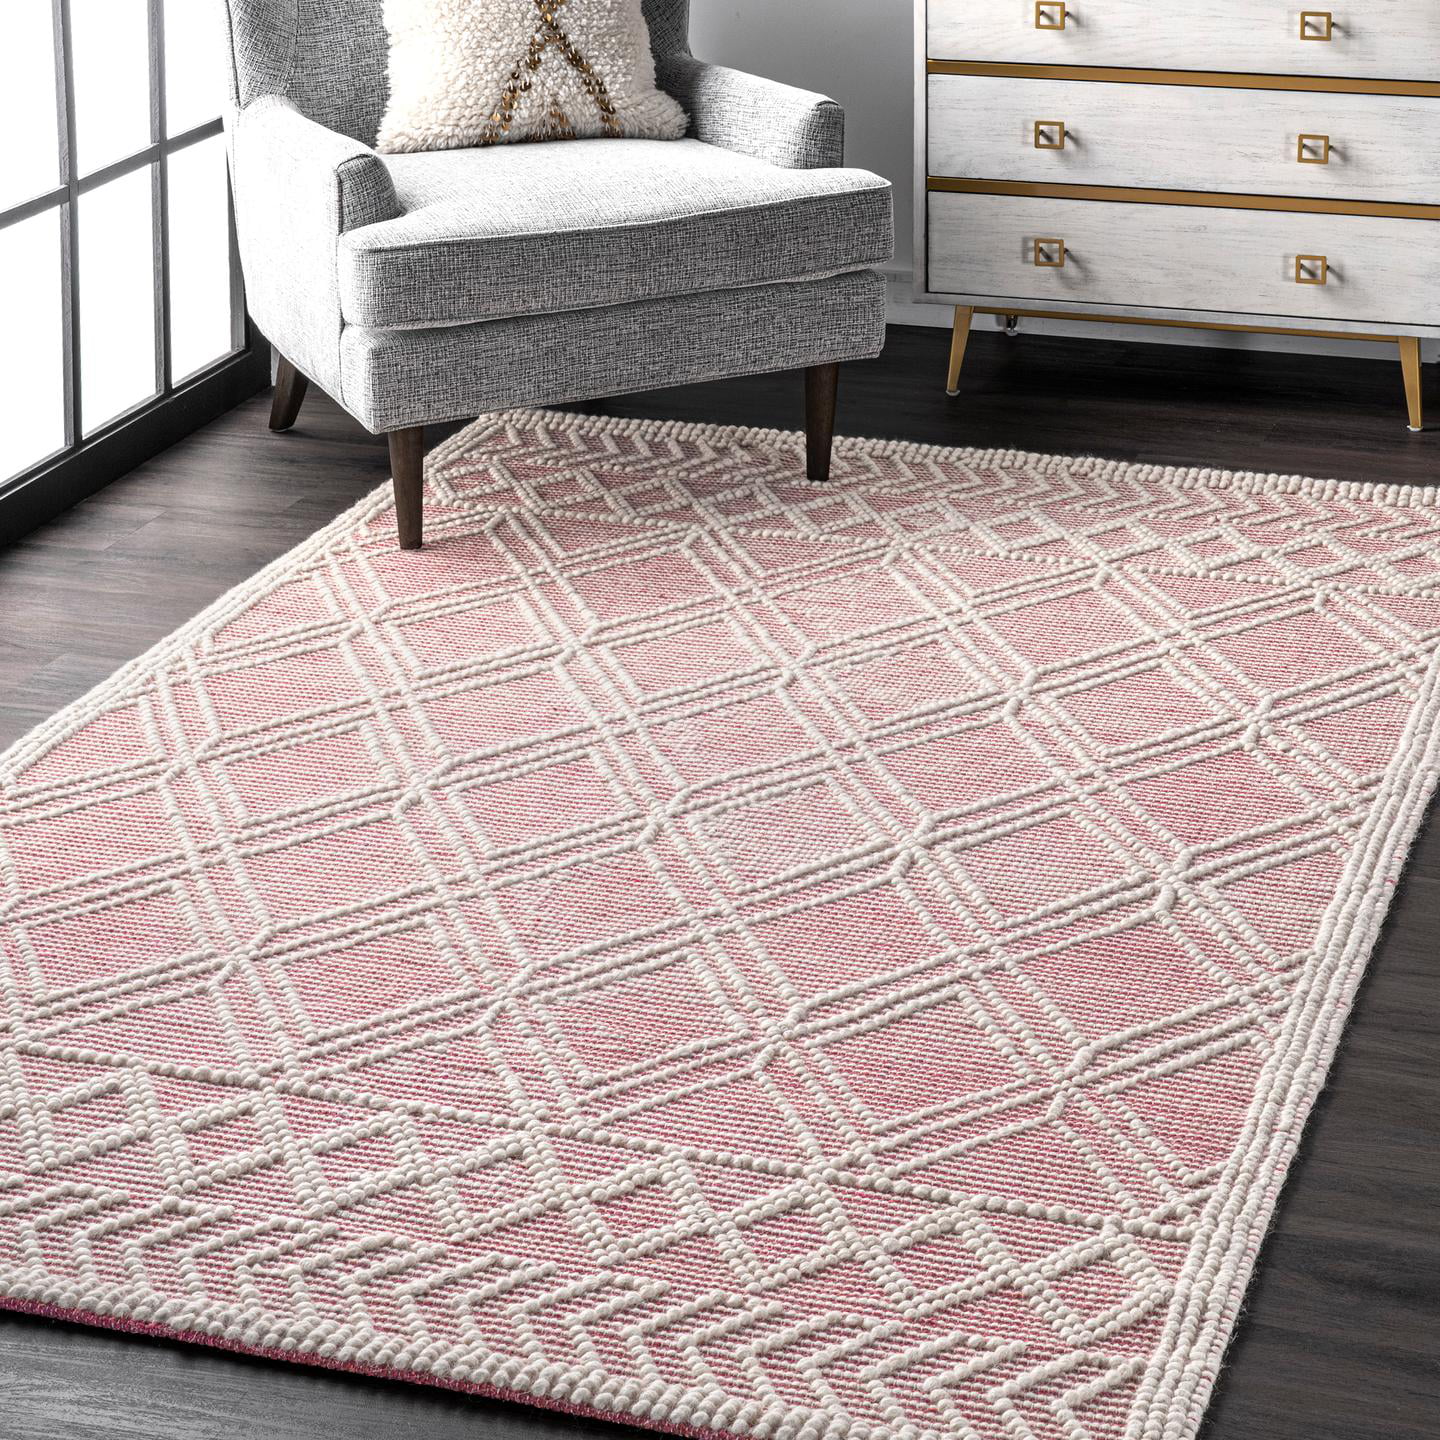 nuLOOM Natti Contemporary Trellis Wool Area Rug, 8' 6 x 11' 6, Pink